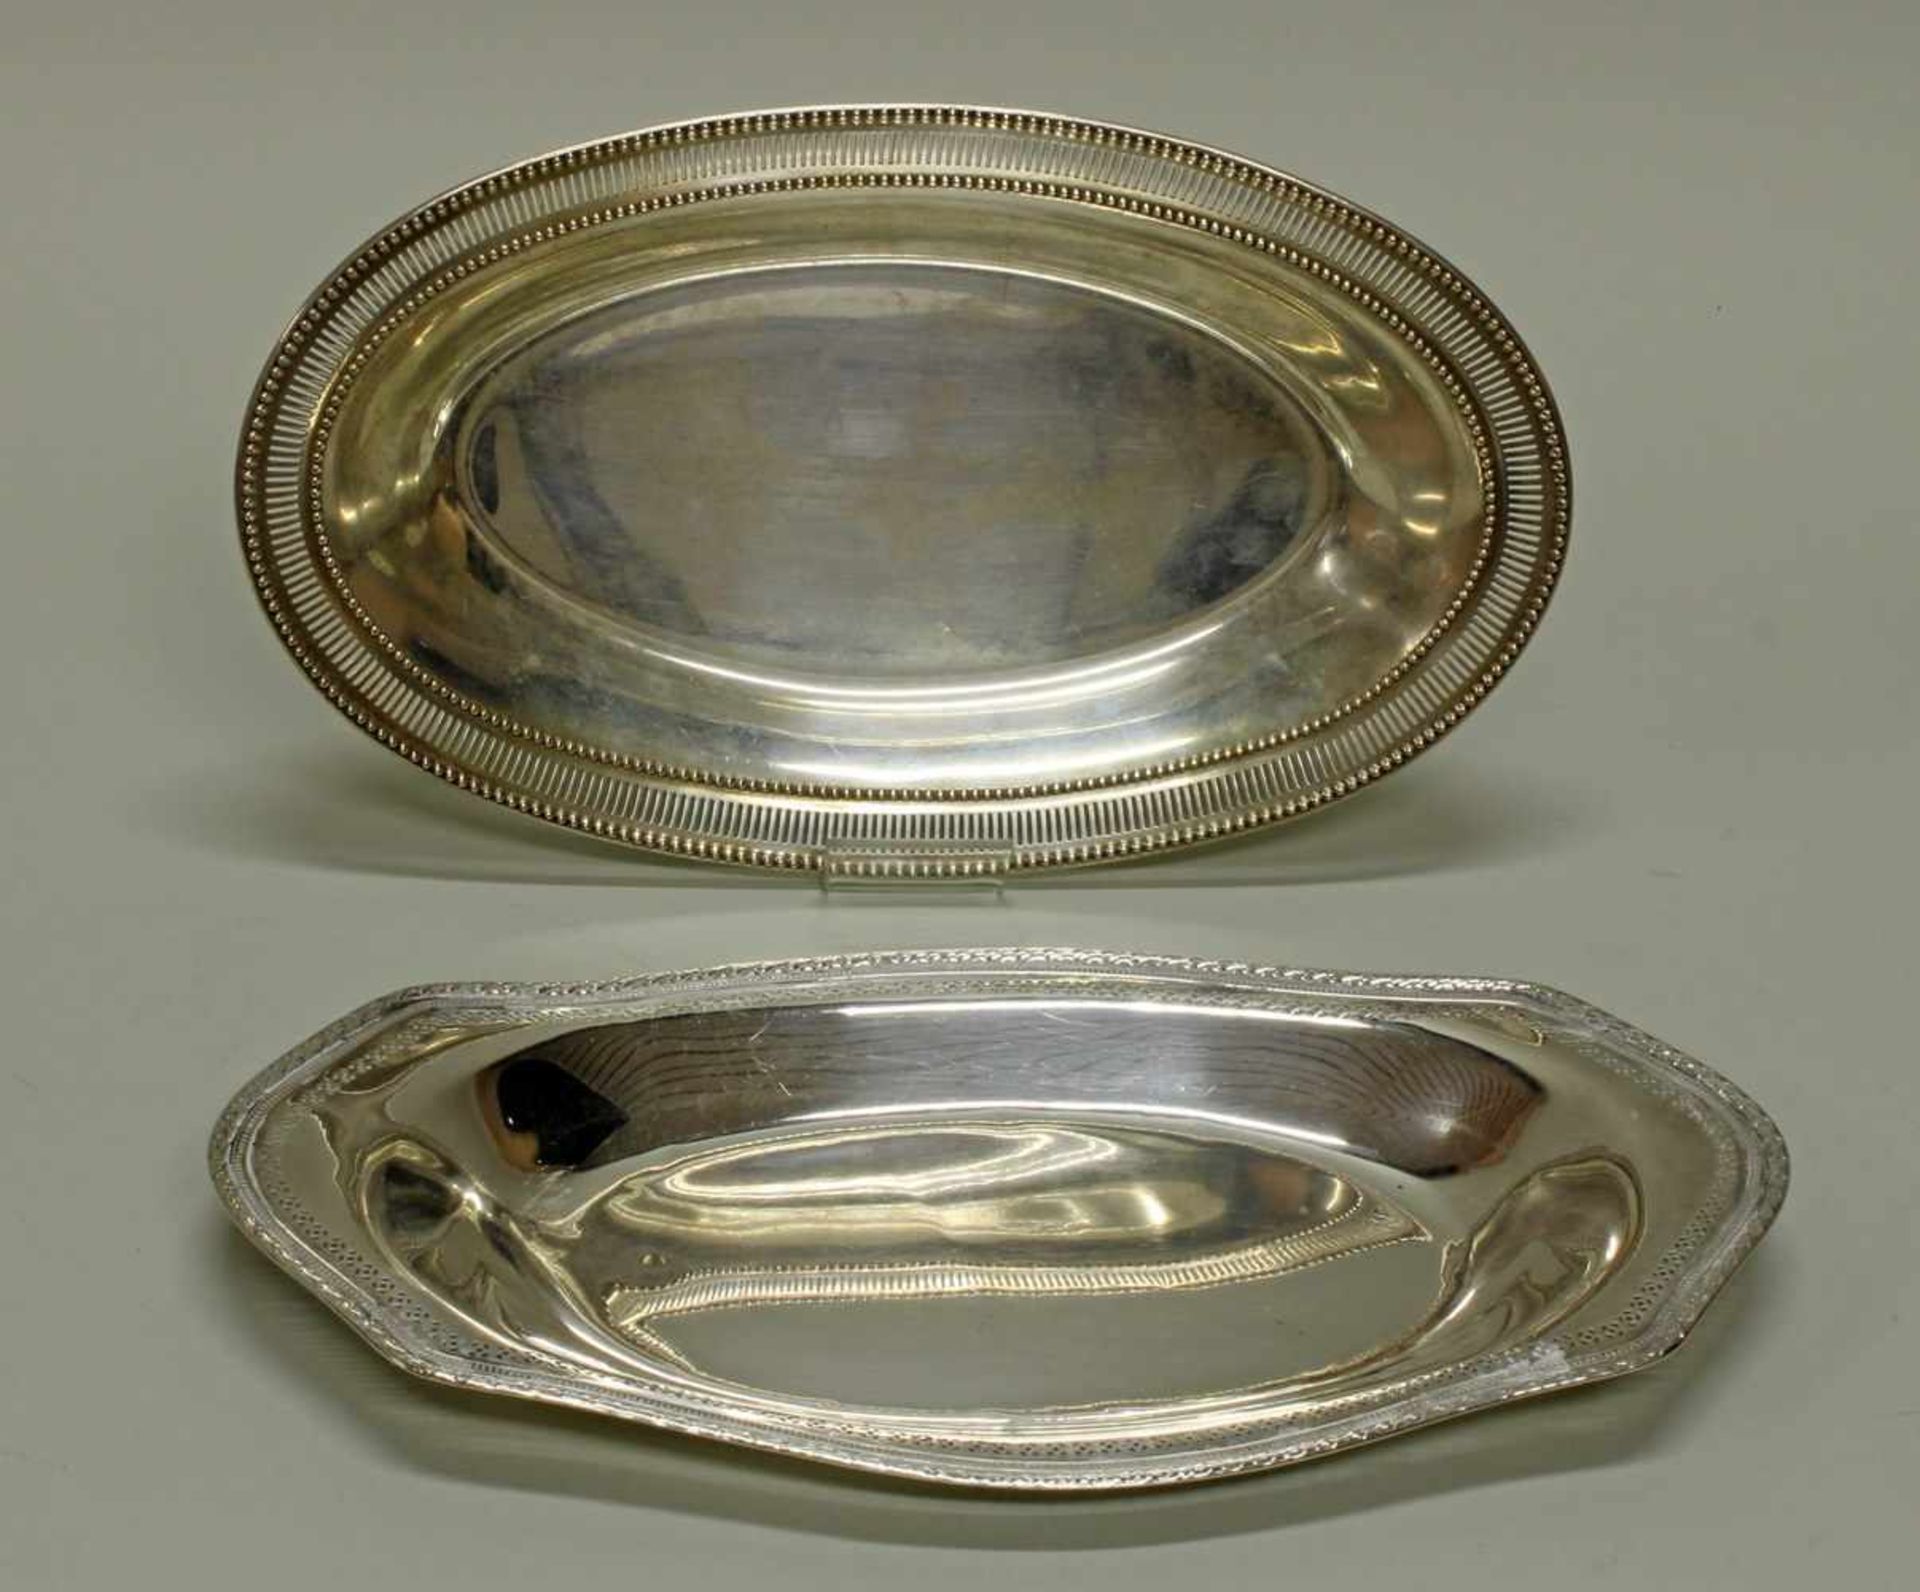 2 Brotschalen, Silber 925, Lorbeer- bzw. Perlrand, Fahne je à jour gearbeitet, 3.3 x 28 x 17 cm, 2.8